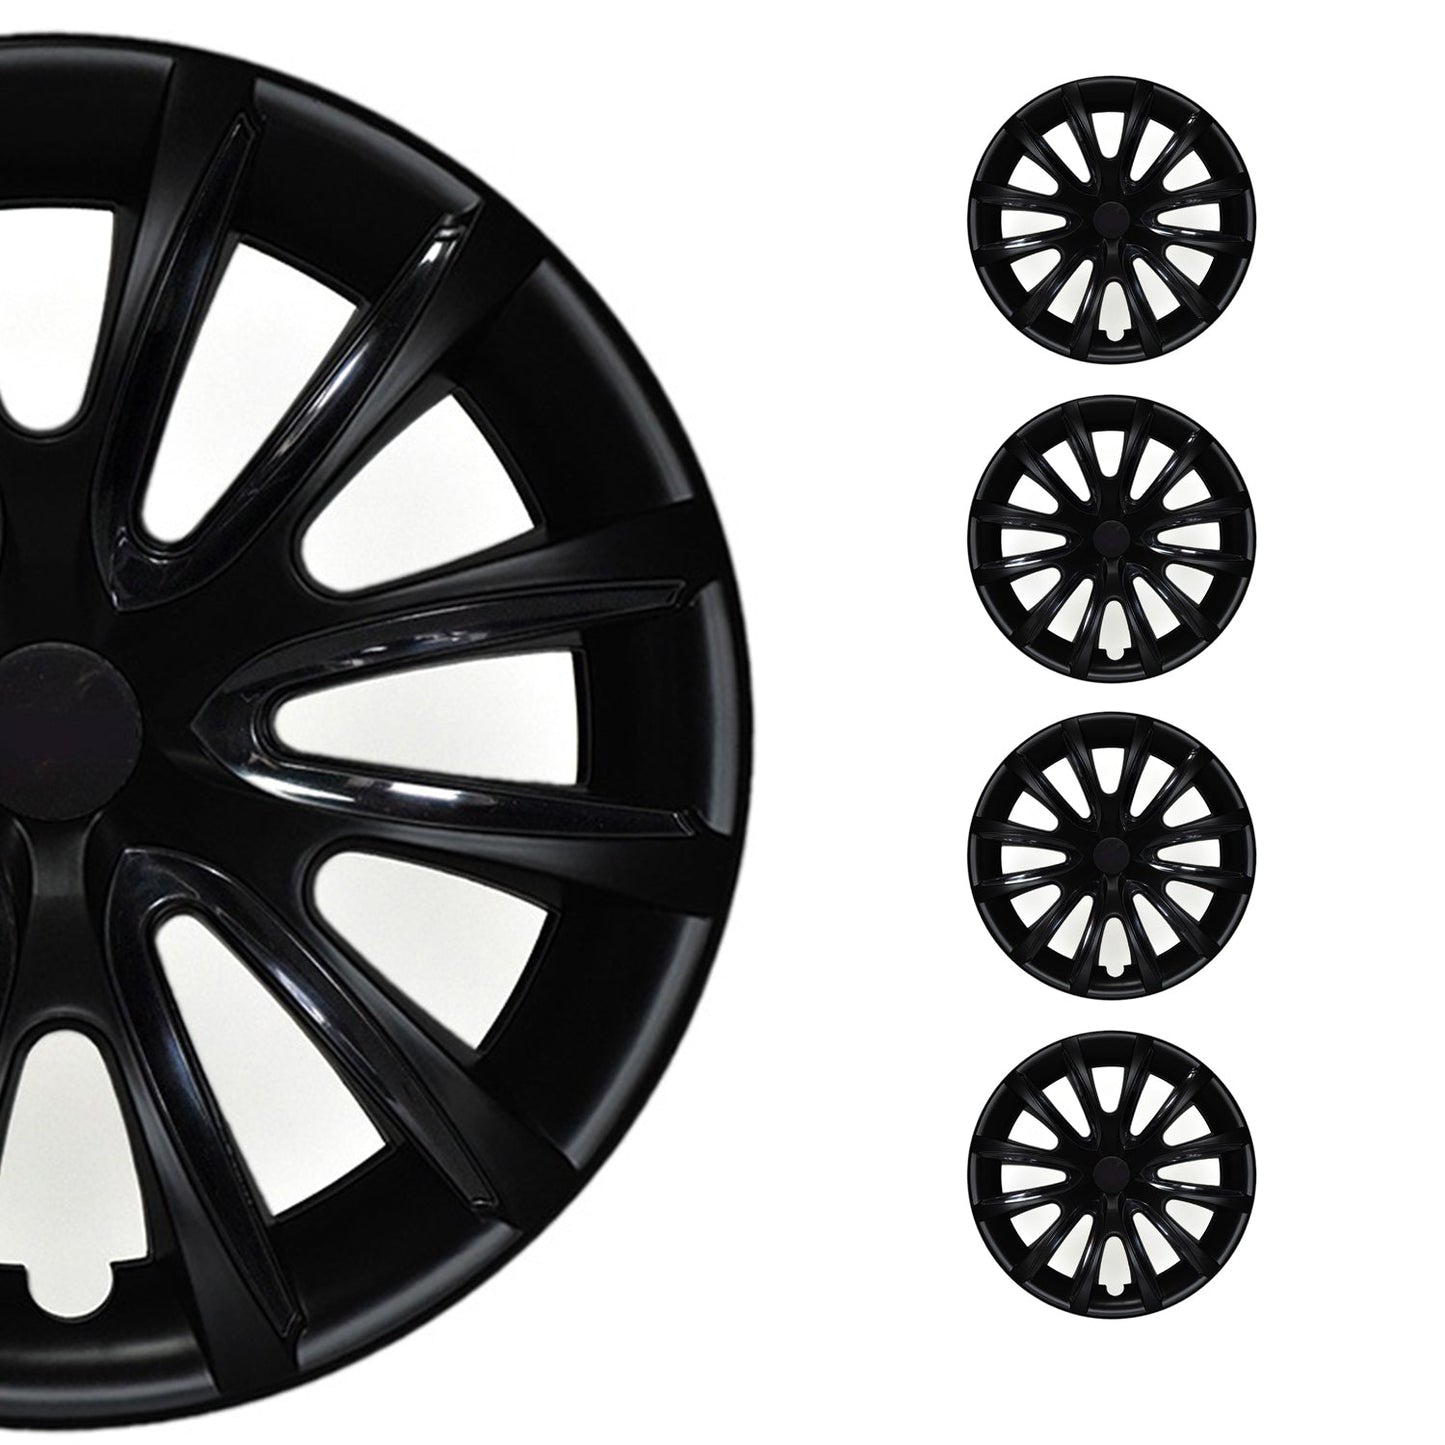 OMAC 16" Wheel Covers Hubcaps for Ford Transit Black Matt Matte U002577